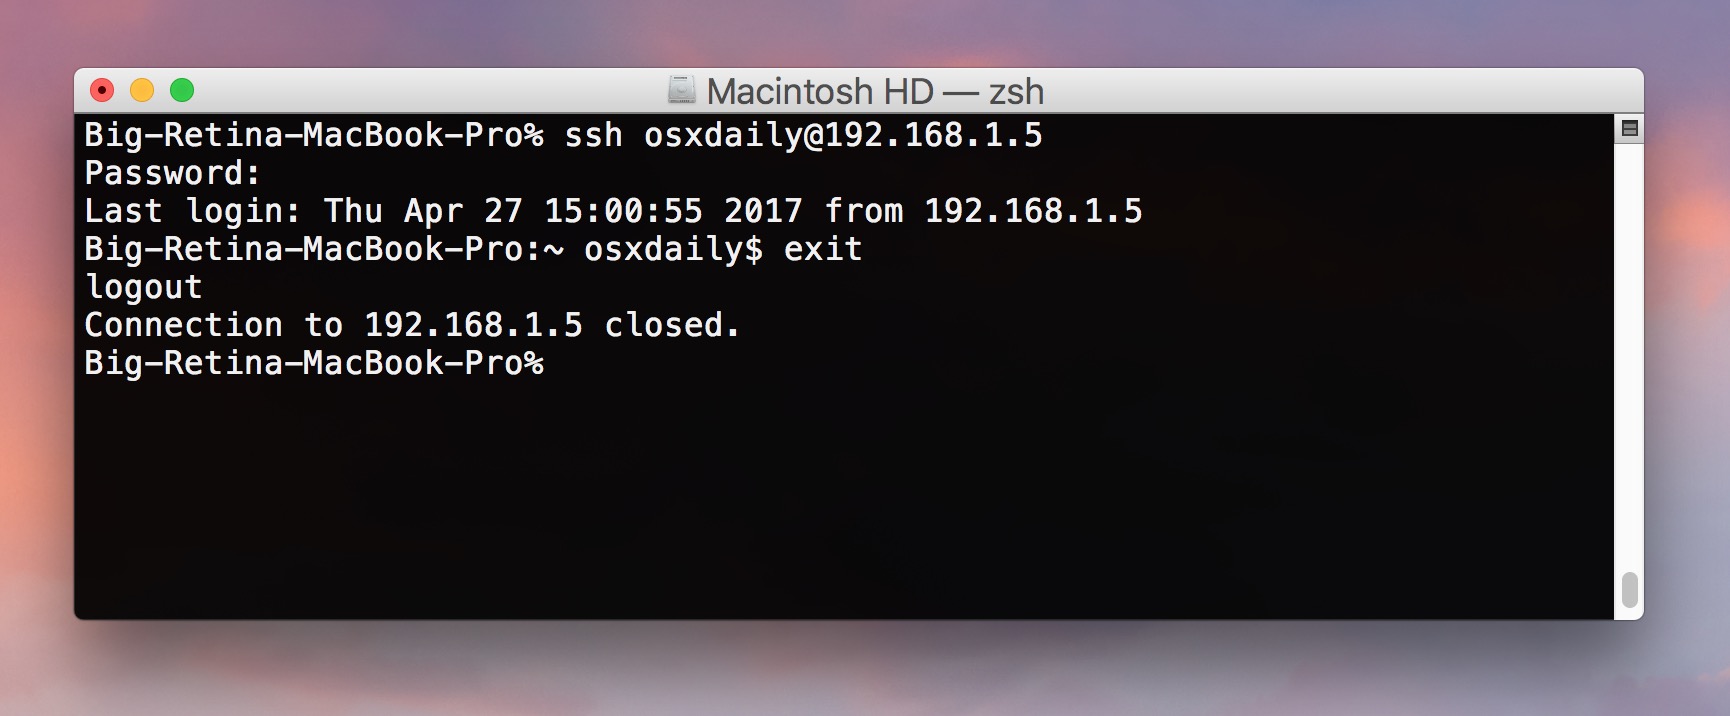 Ssh Client For Mac Os X